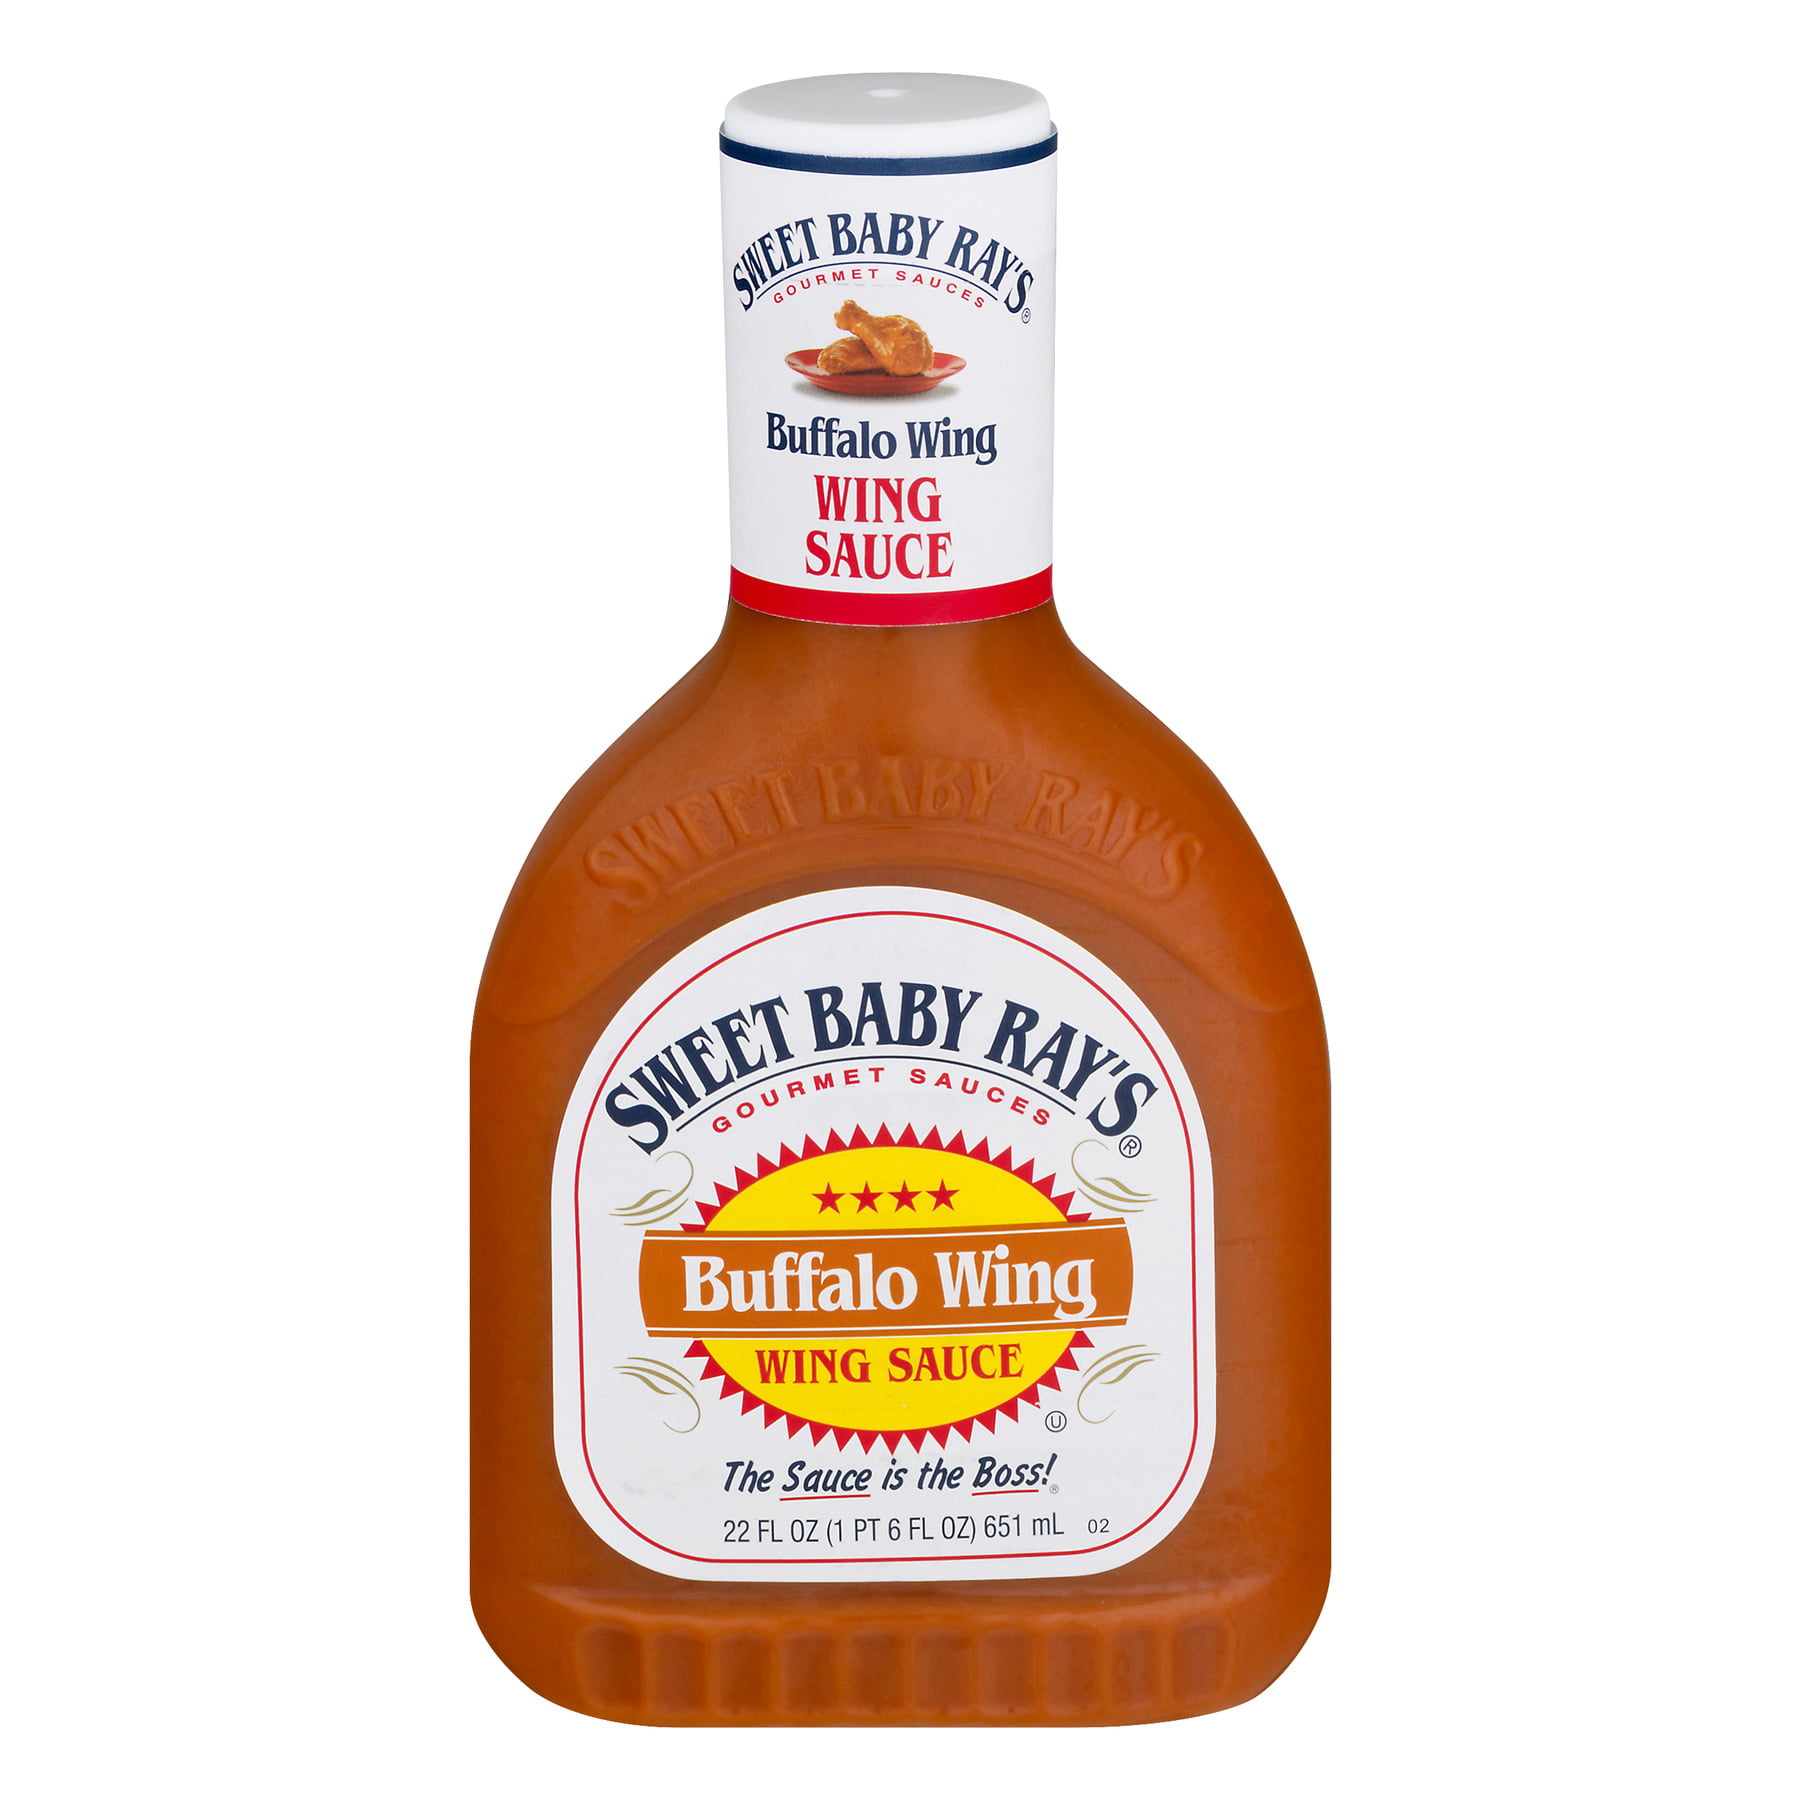 Sweet Baby Ray's Buffalo Wing Sauce, 22.0 FL OZ - Walmart.com - Walmart.com